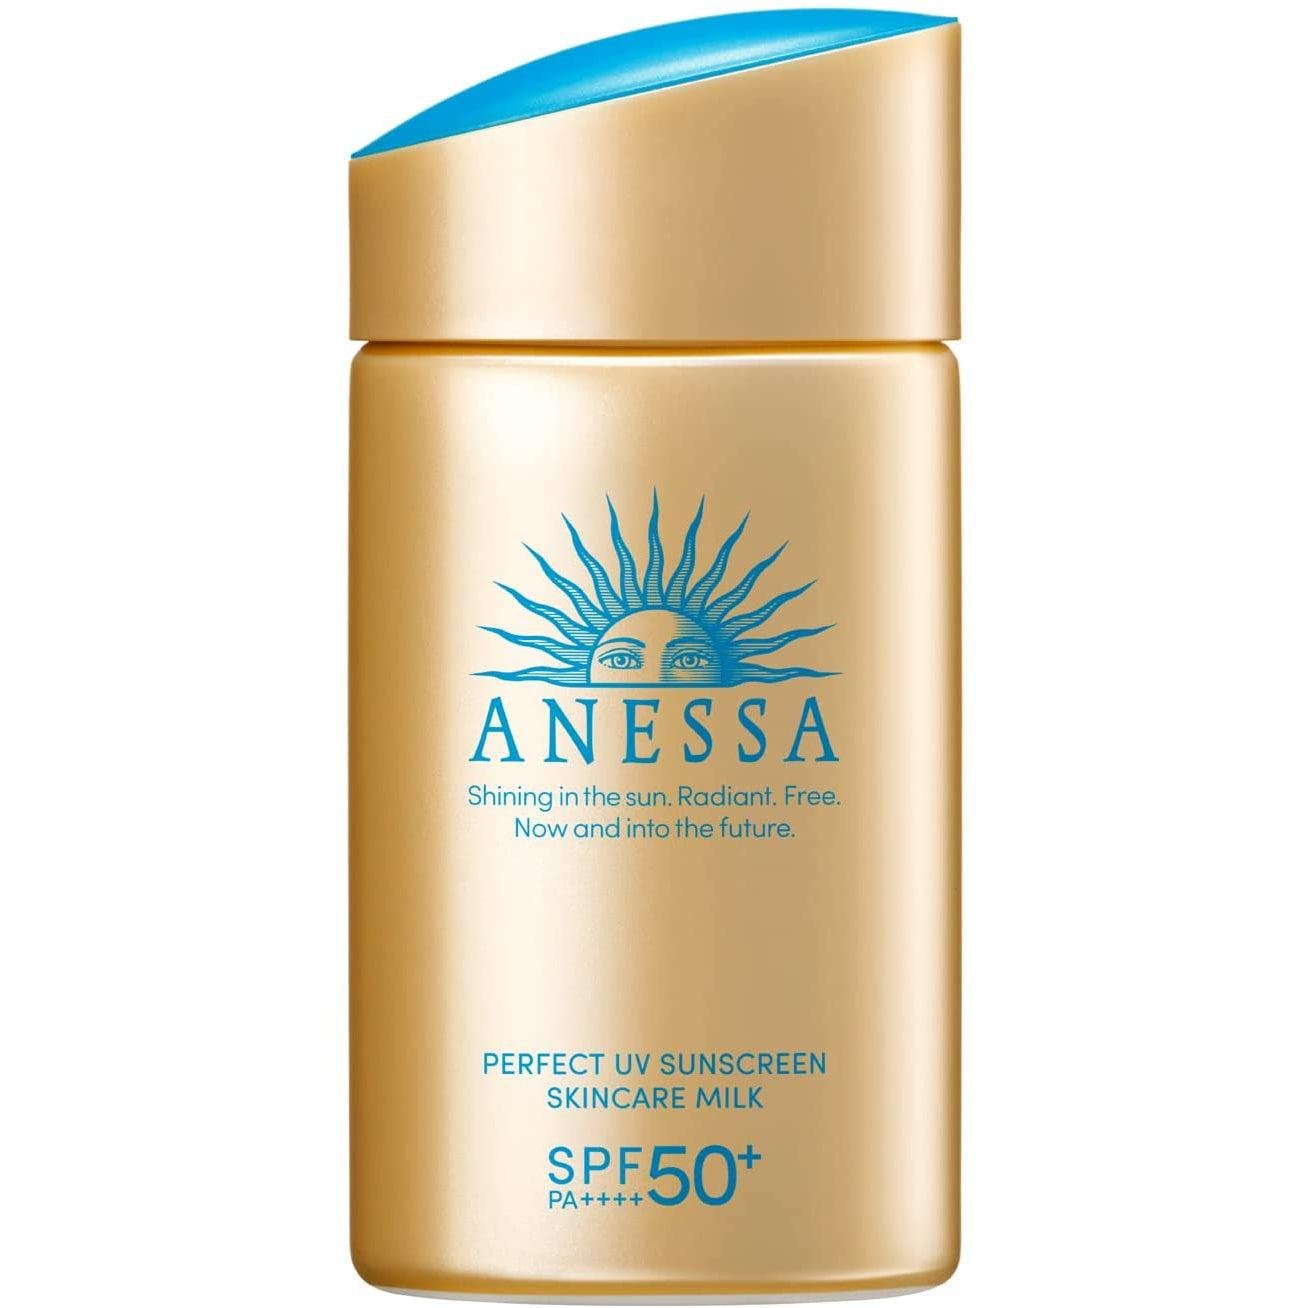 Shiseido Anessa Perfect UV Sunscreen Skincare Milk SPF50+ 60ml